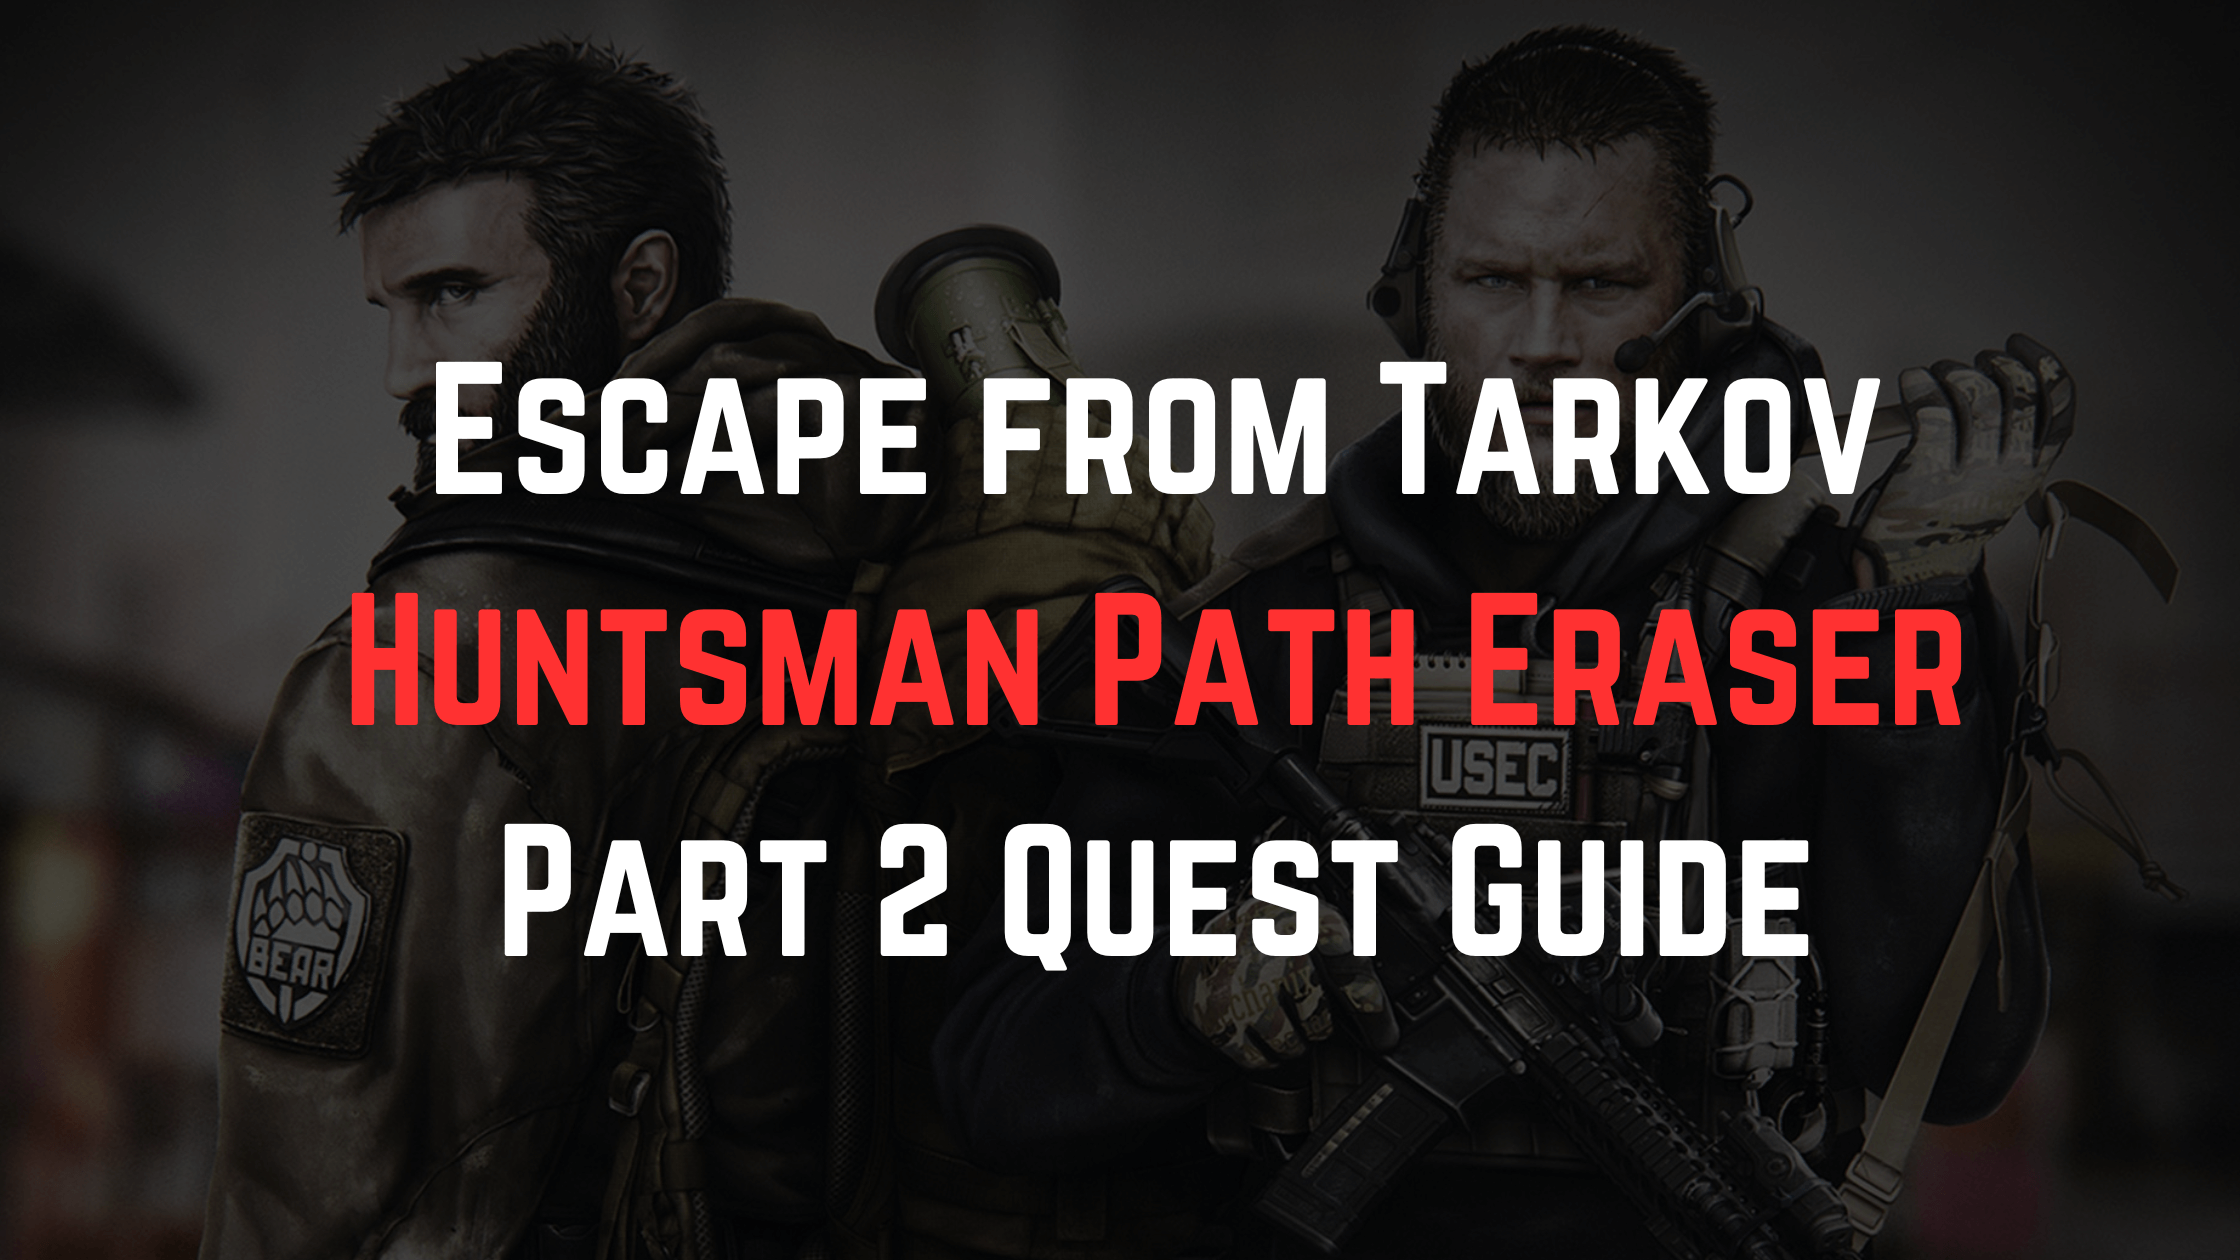 The Huntsman Path Eraser Part 2